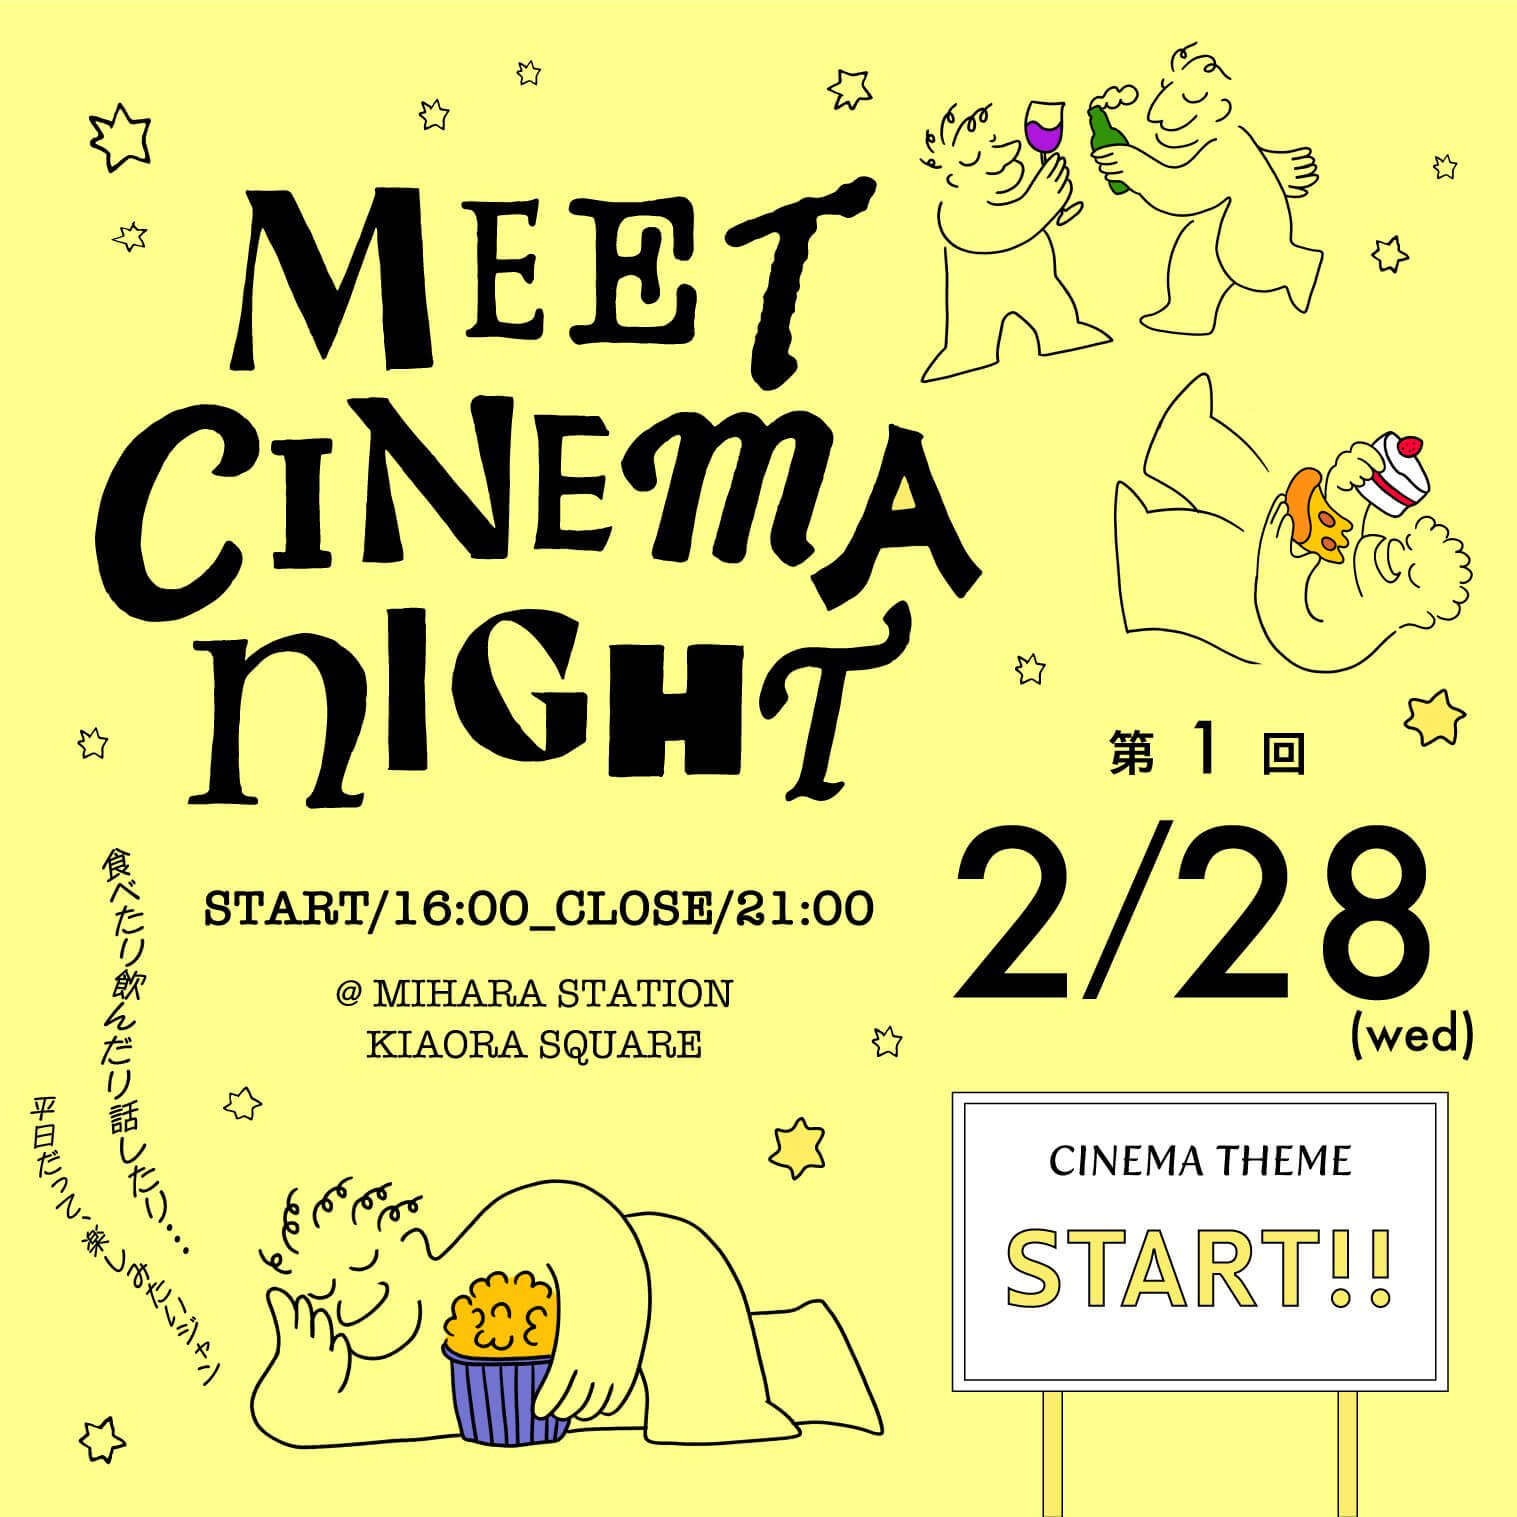 Meet Cinema Night